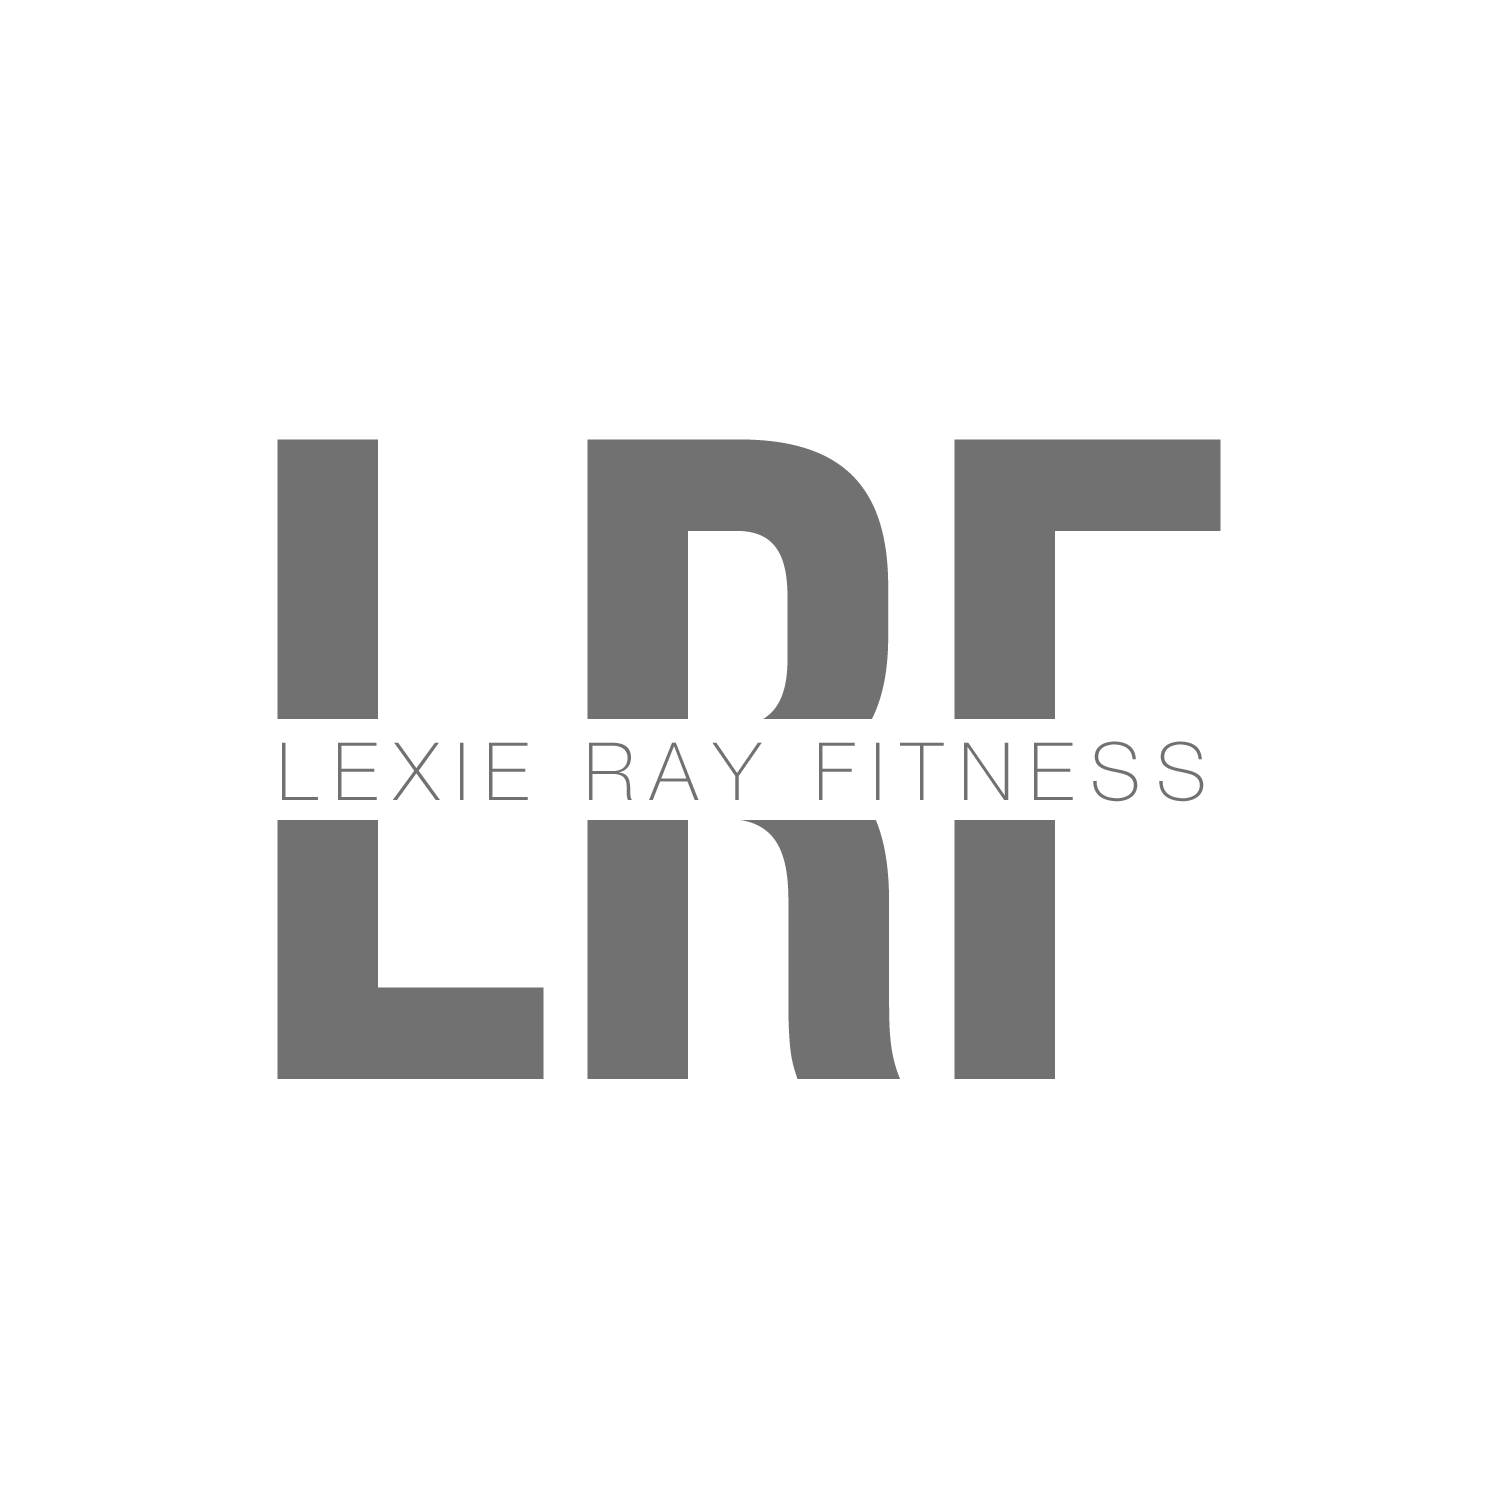 Lexie Ray Fitness